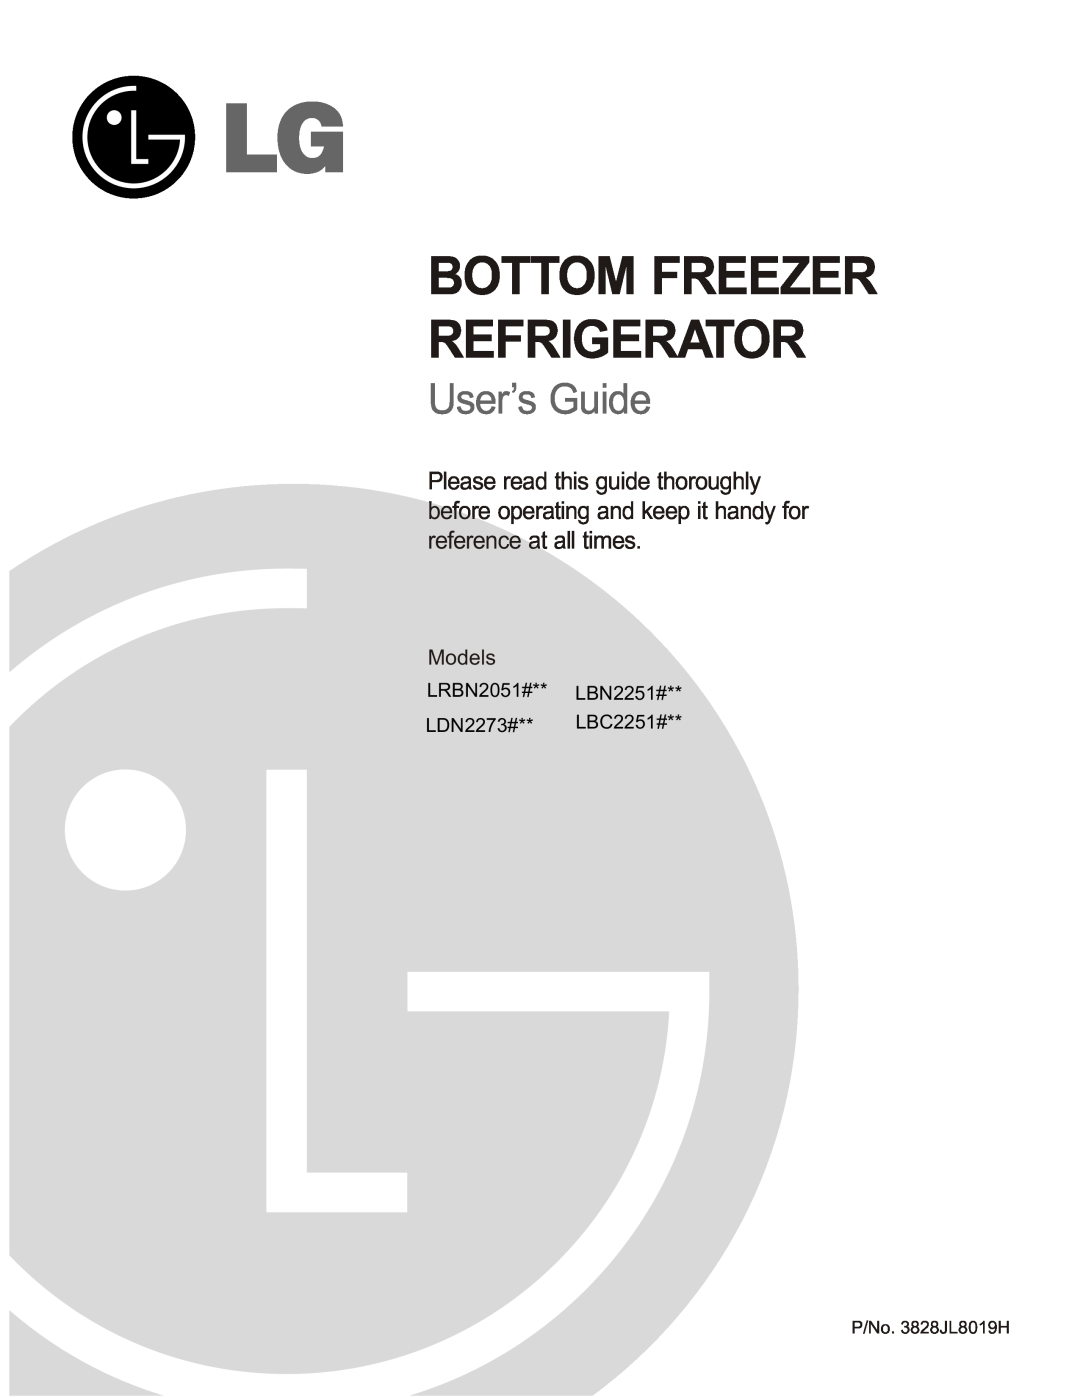 LG Electronics manual Models, LRBN2051#** LBN2251# LDN2273#** LBC2251#, Bottom Freezer Refrigerator, User’s Guide 